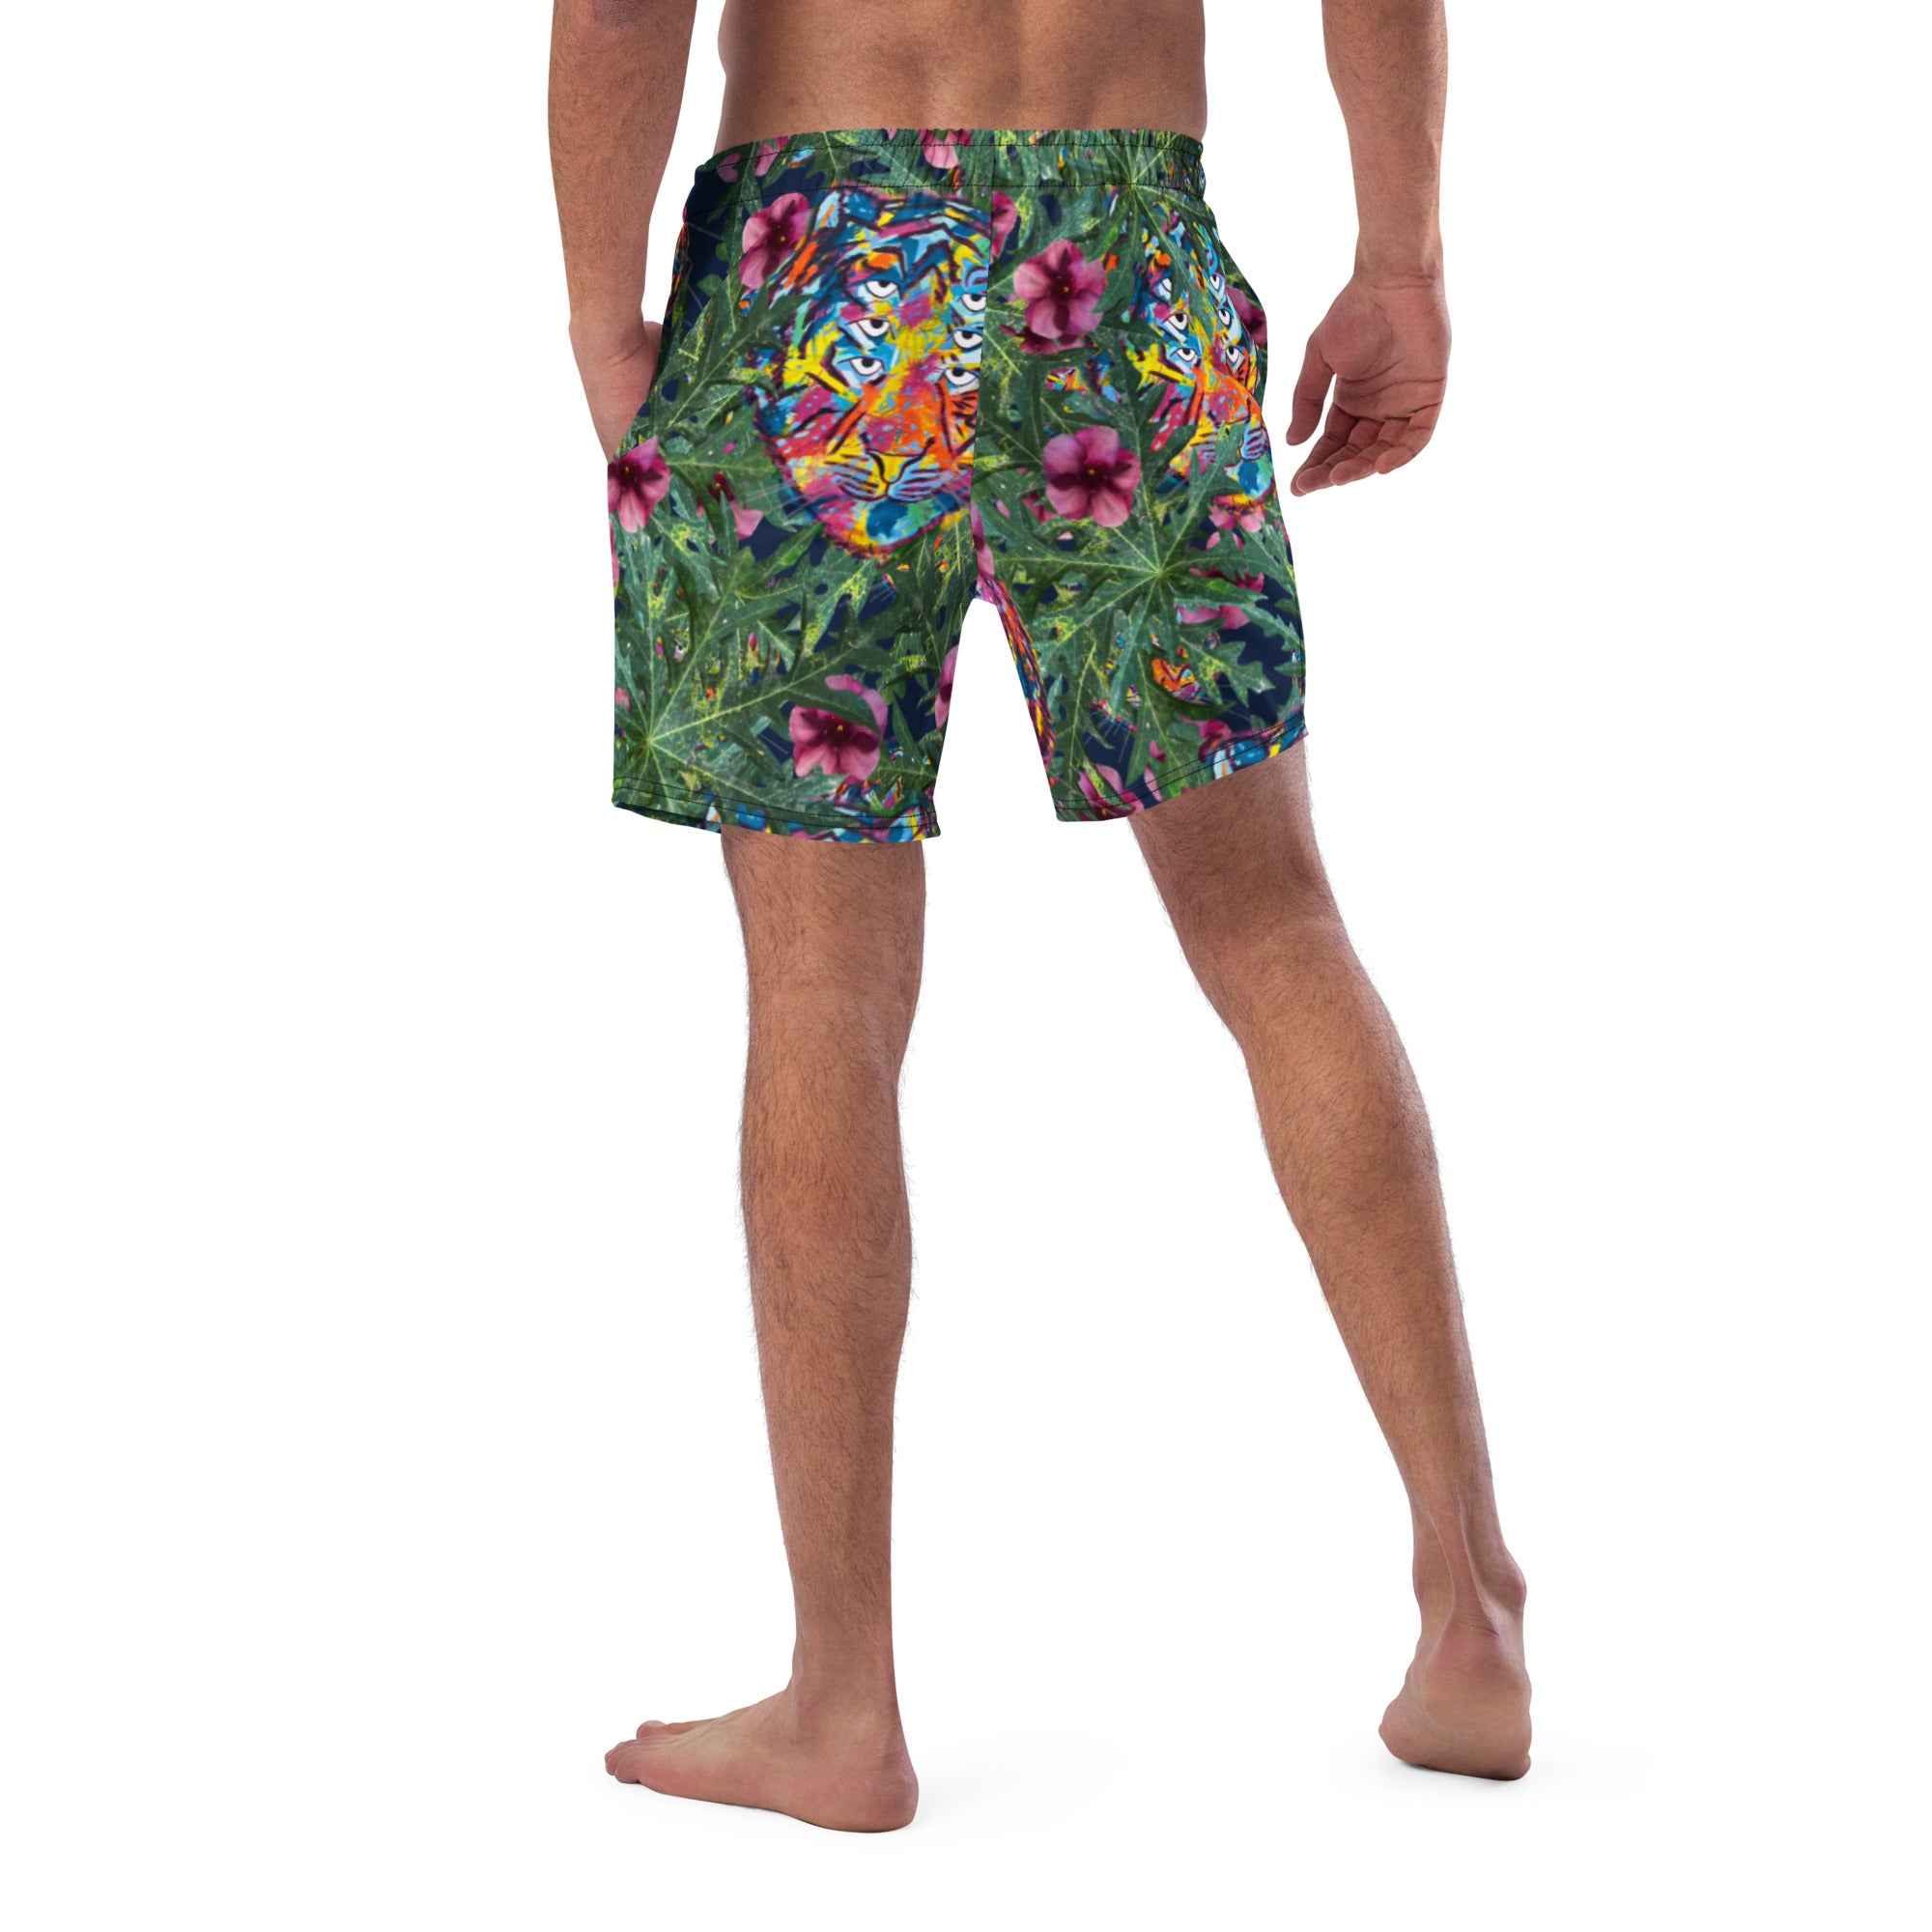 flora and fauna Men's swim trunks